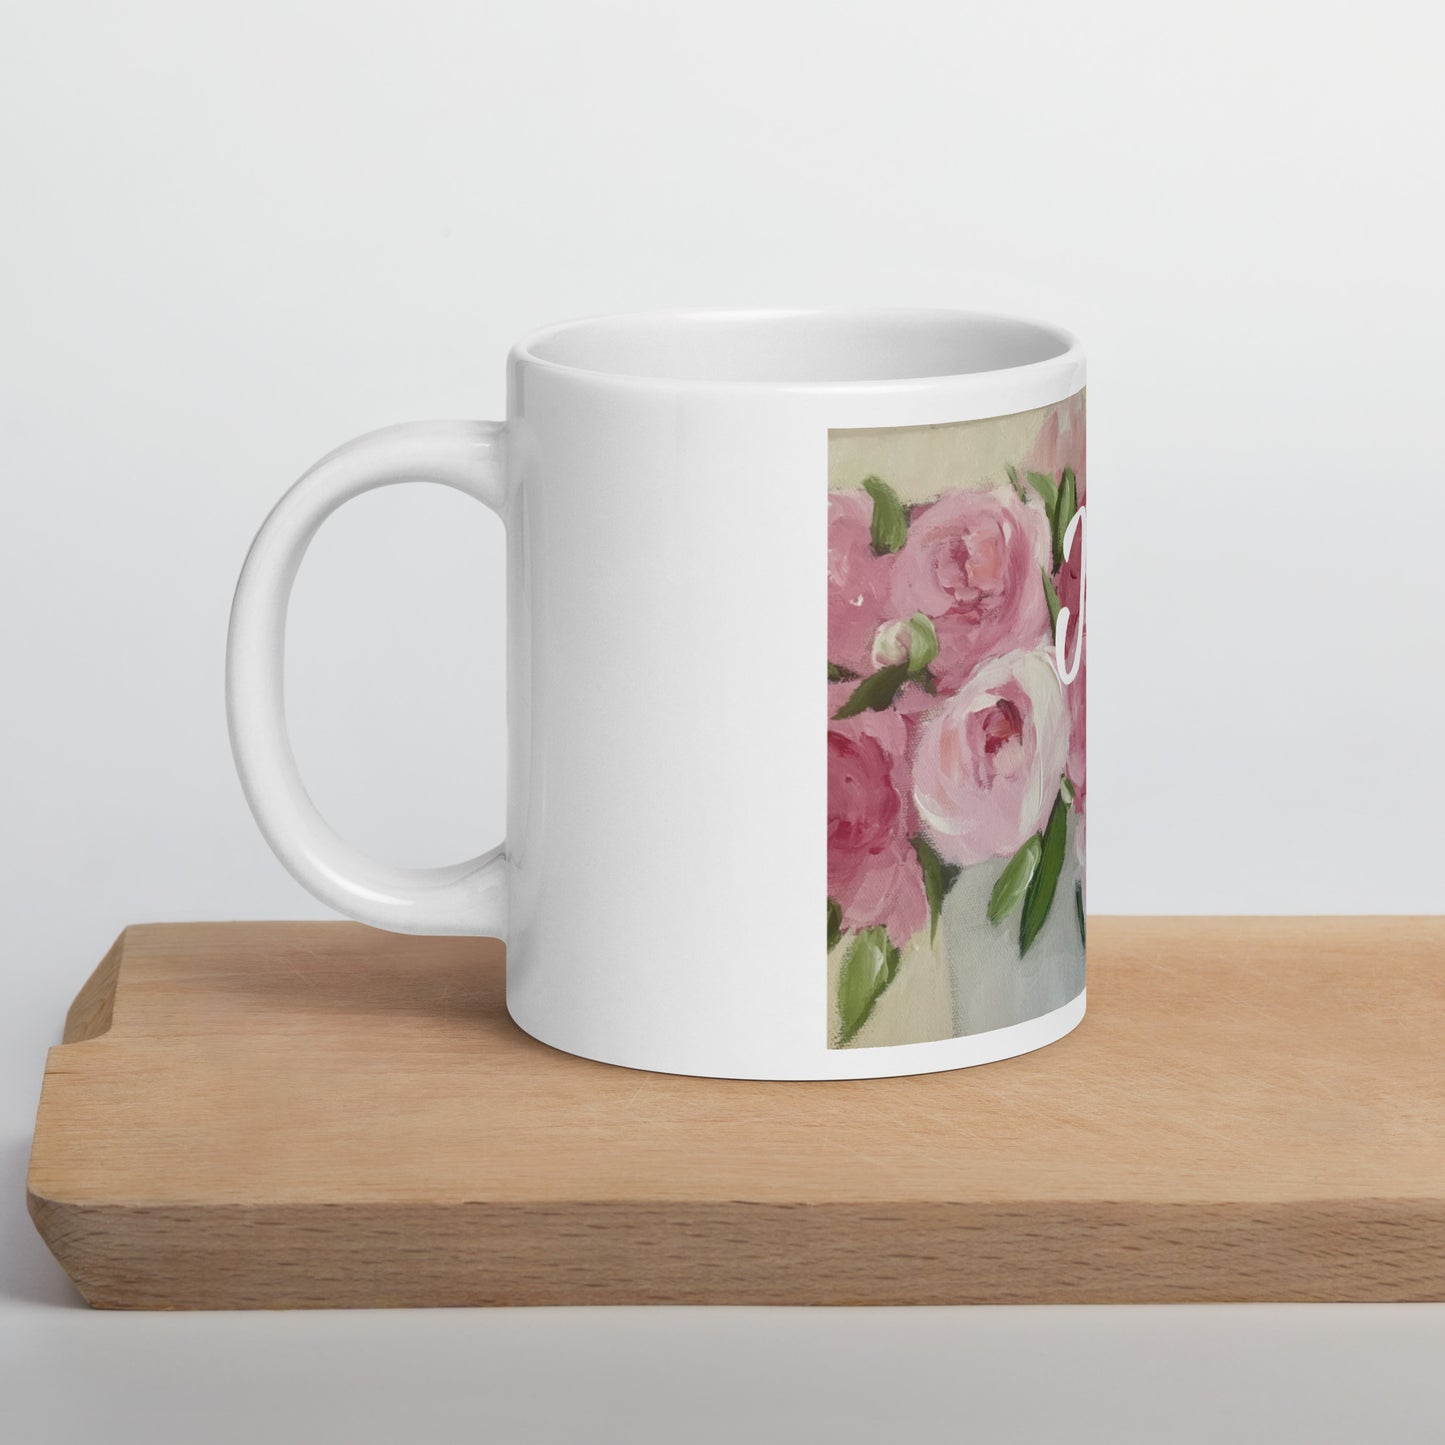 Rose Floral "Joy" Mug